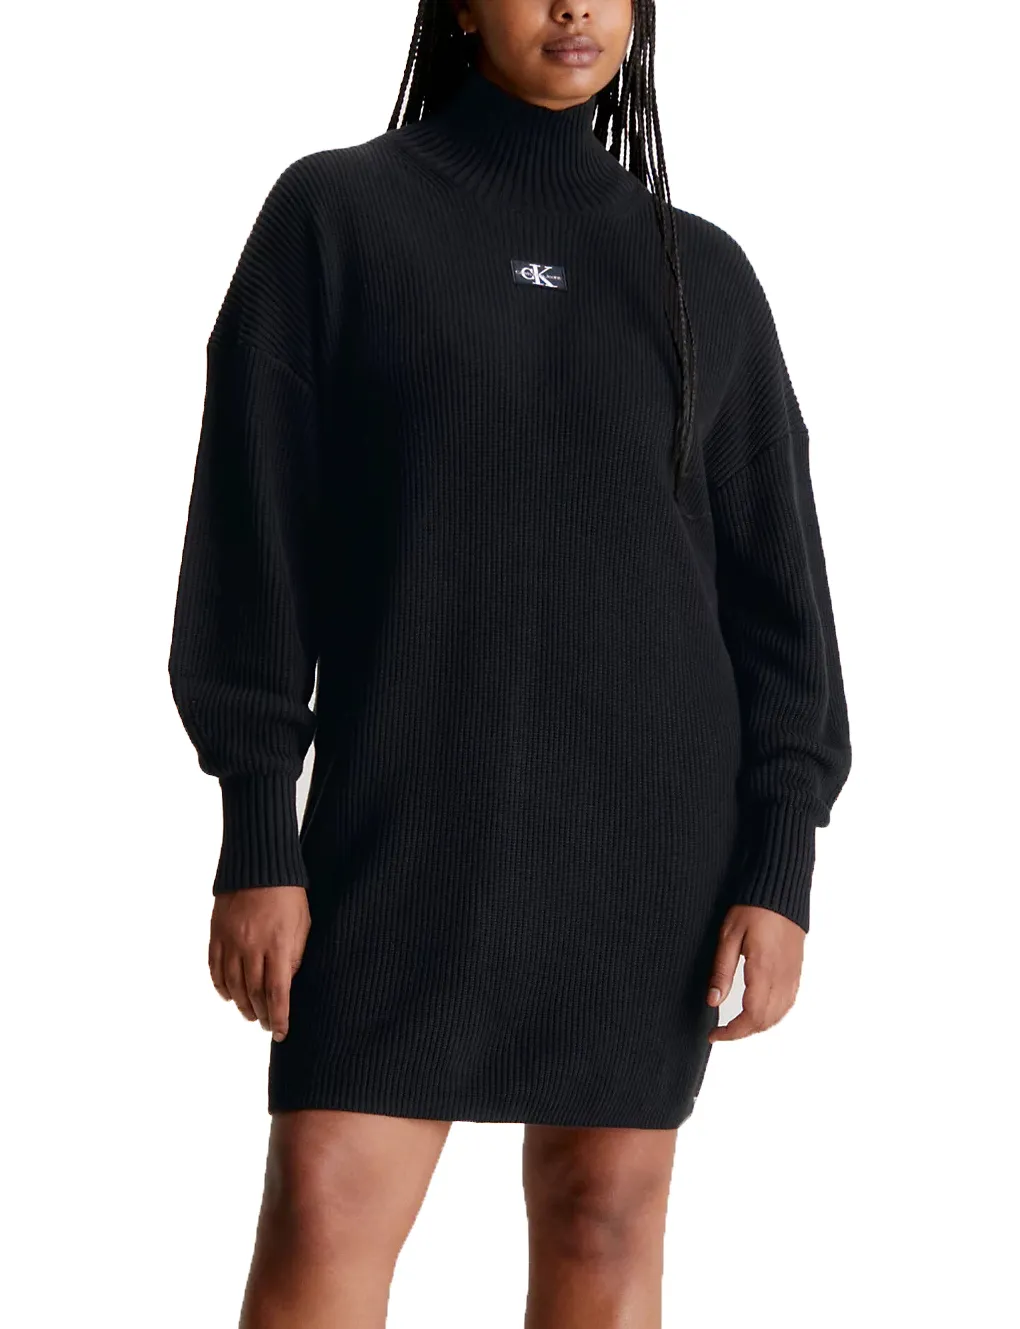 Label KLEIN - Dress Choice+Attitude Loose Black CK JEANS Woven | CALVIN Sweater